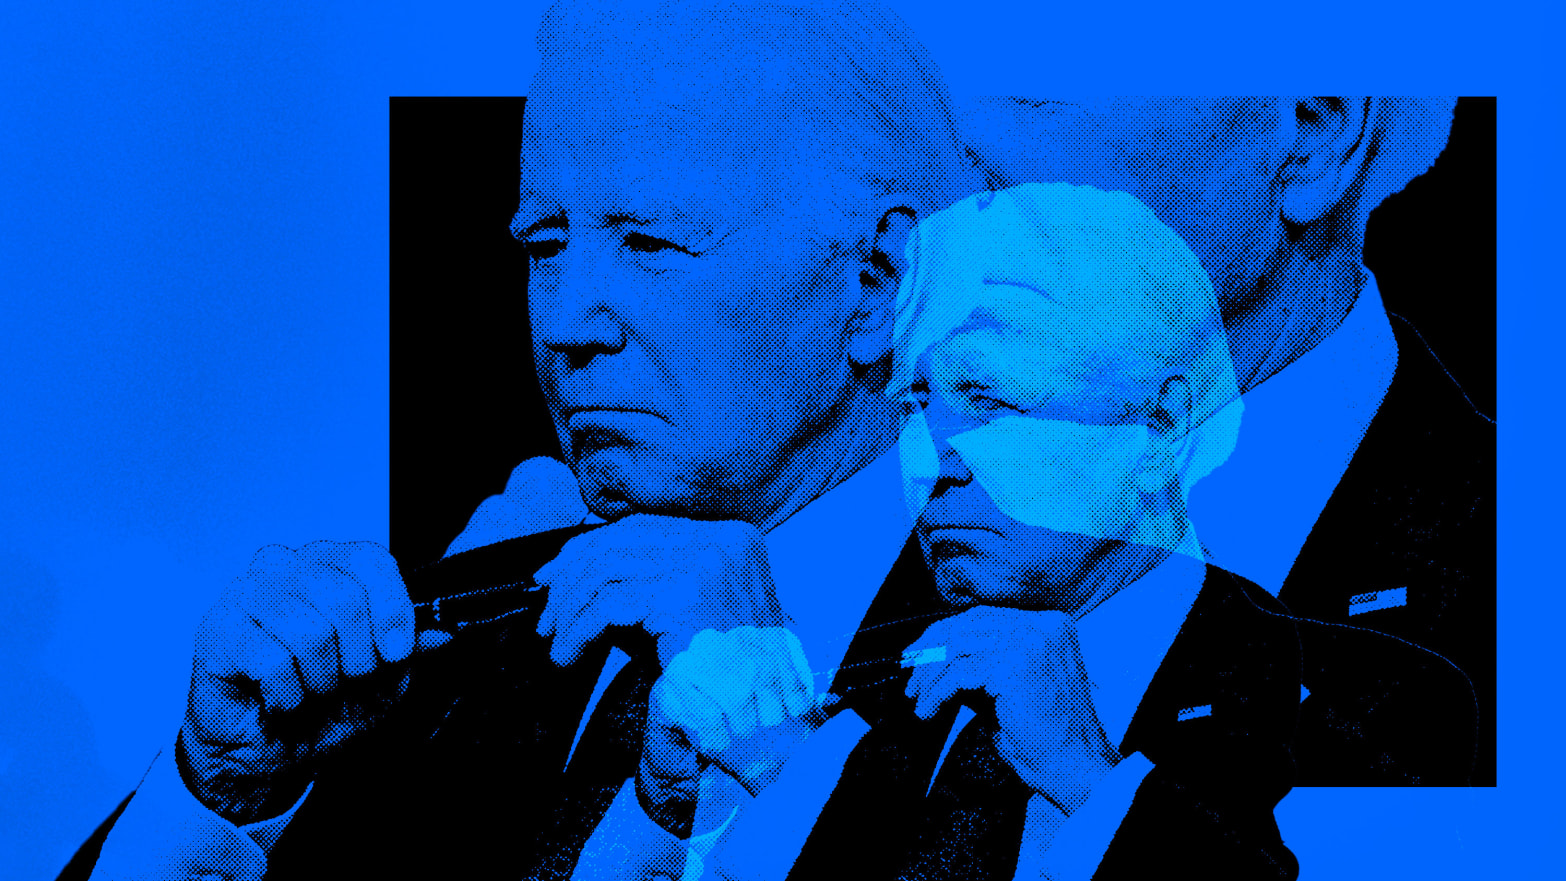 A photo illustration of Joe Biden in blue and black